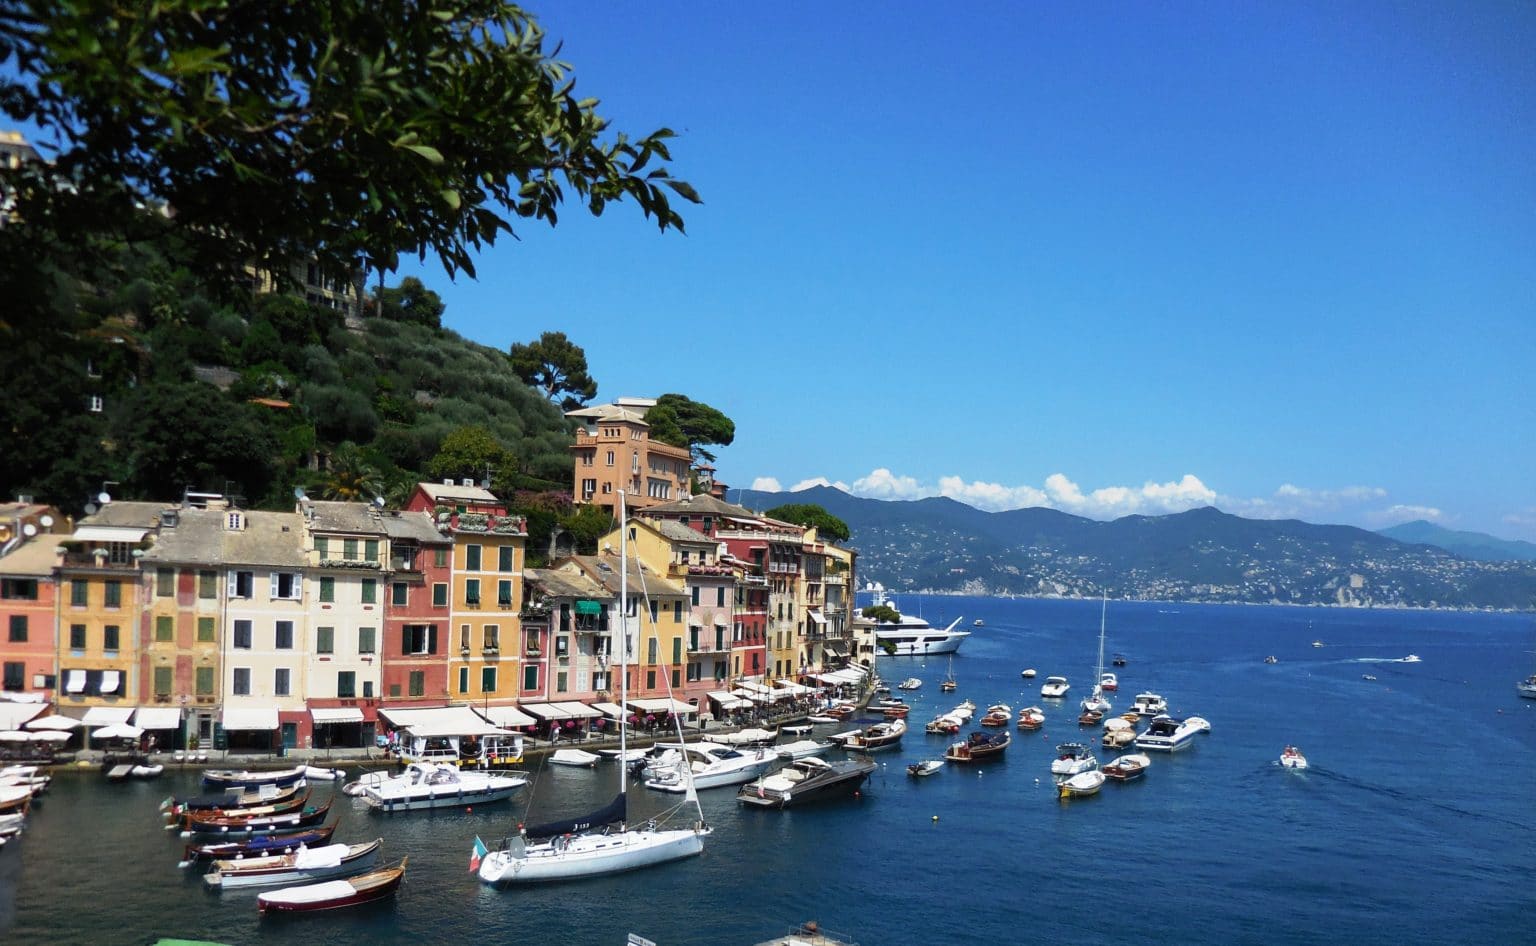 The 10 best activities in Italy